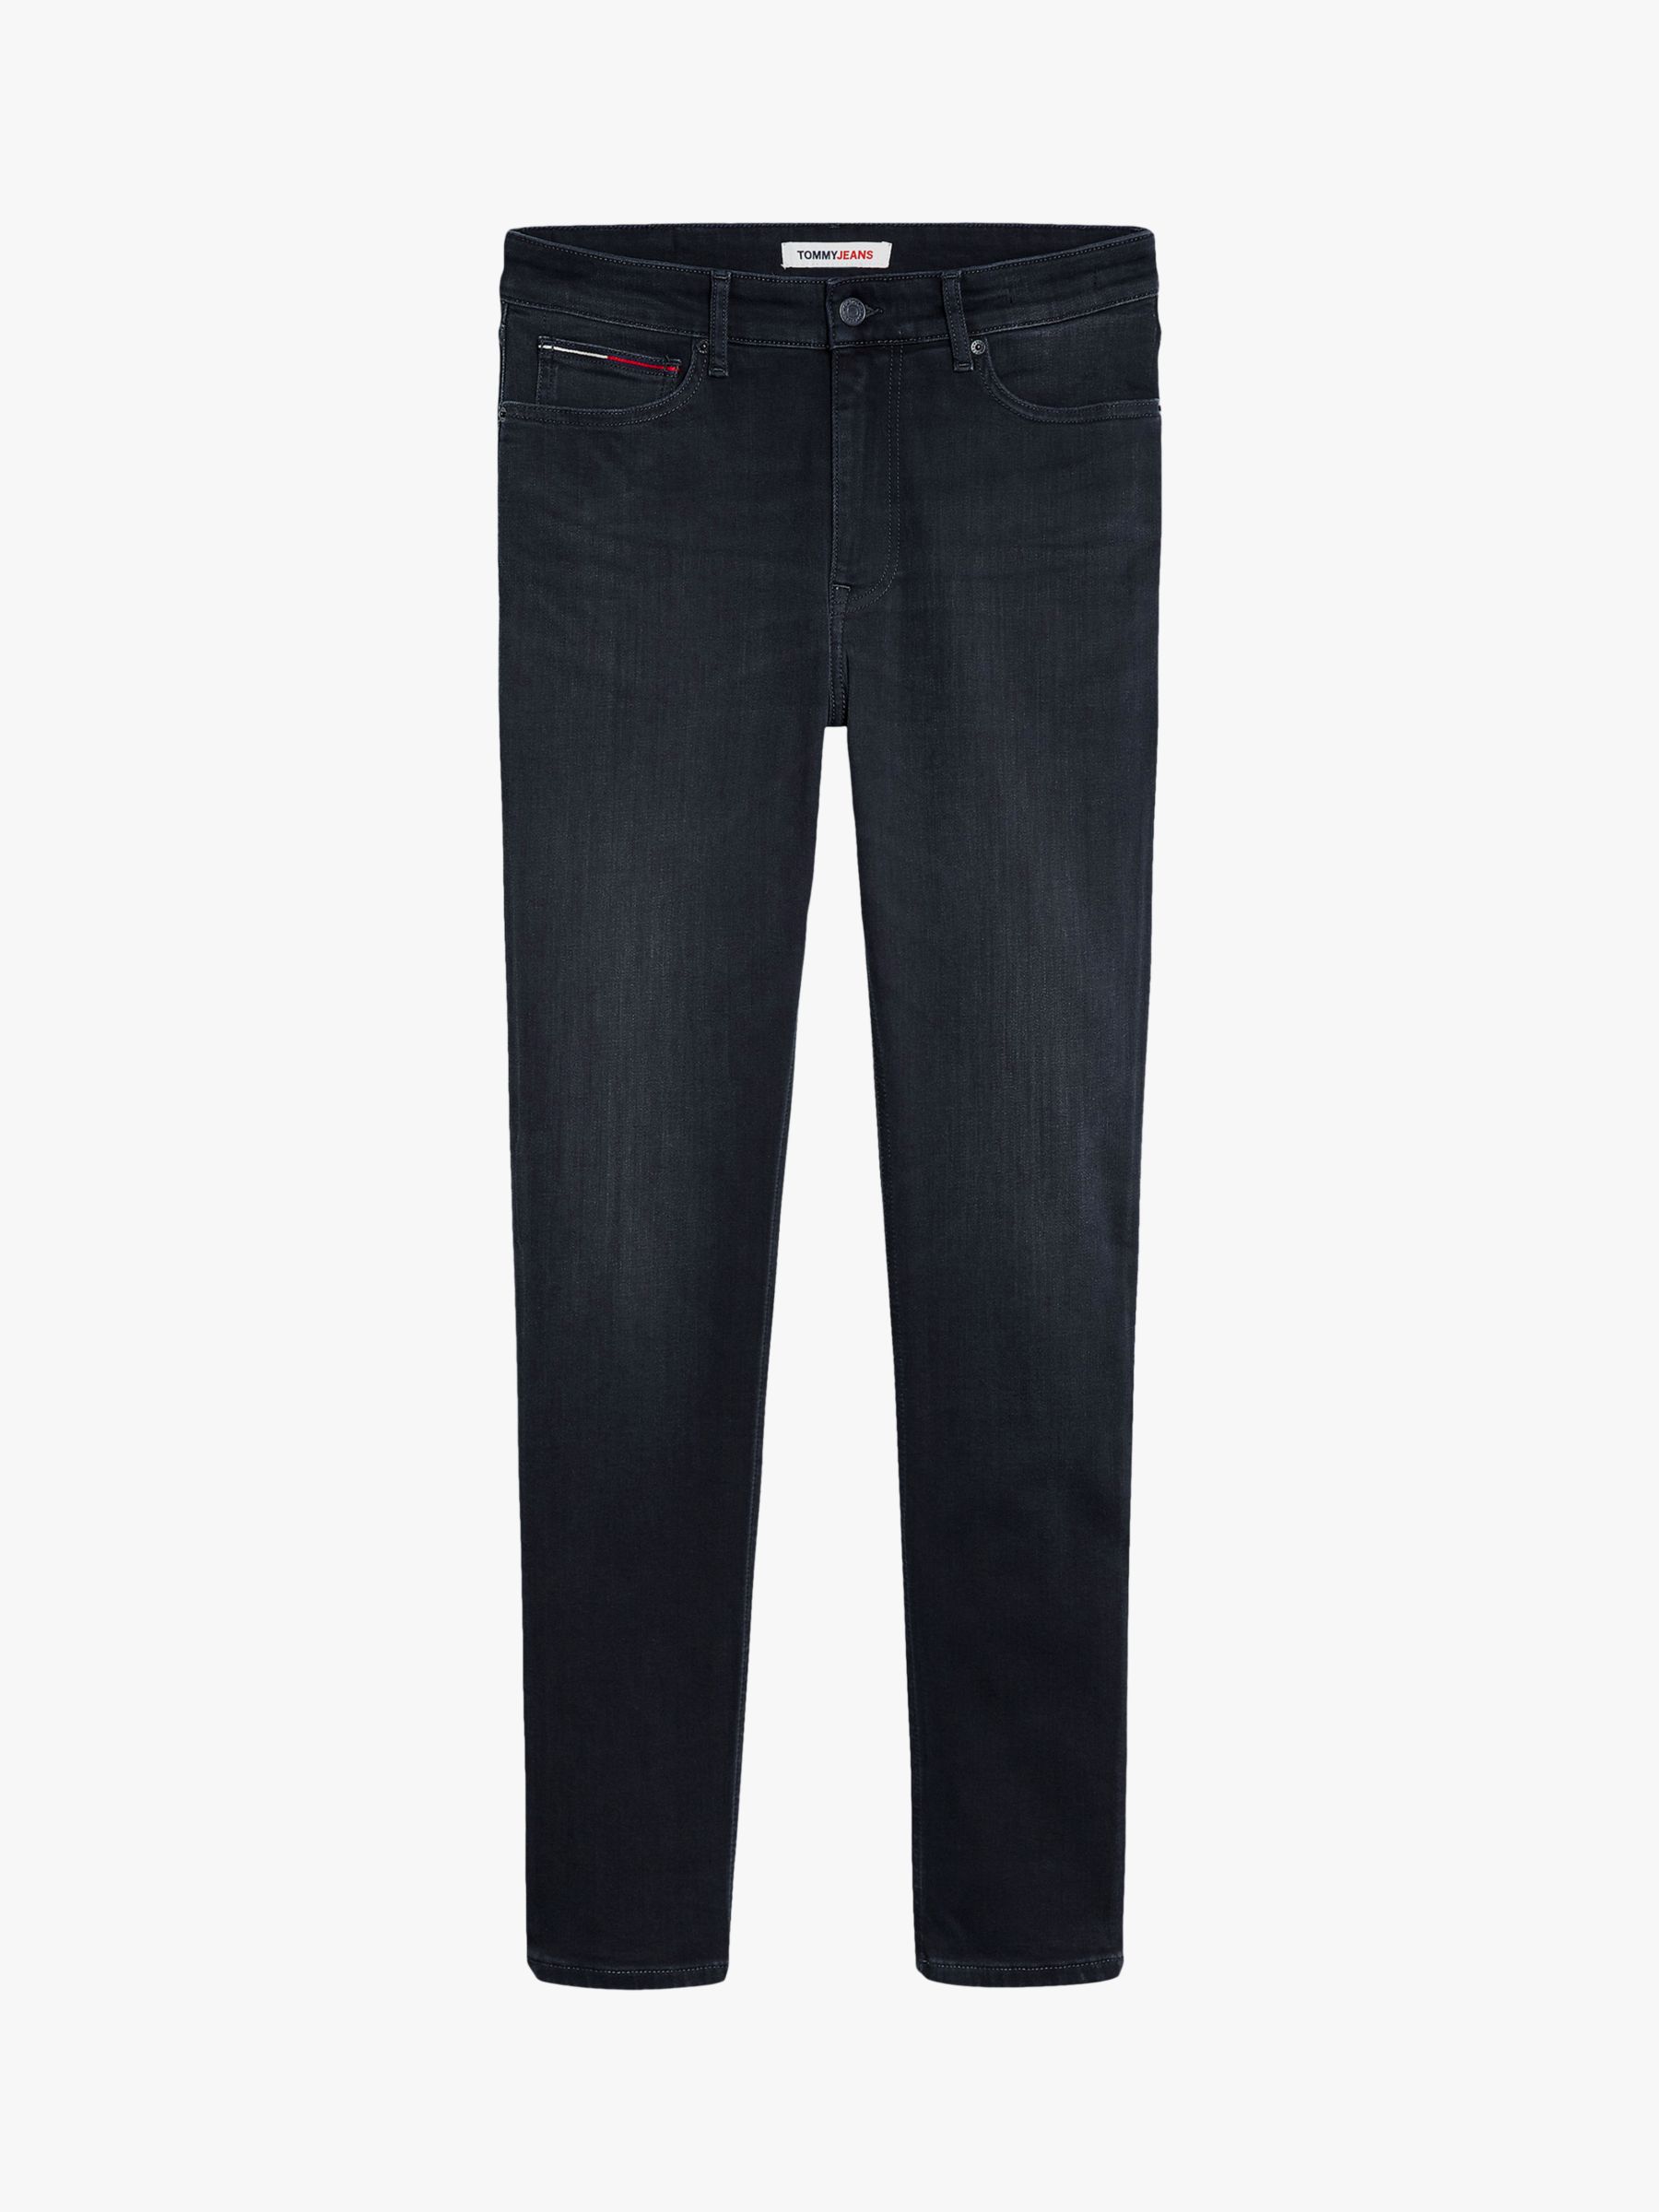 Hilfiger Denim Jacob Skinny Fit Jeans, Dynamic Black, 34S